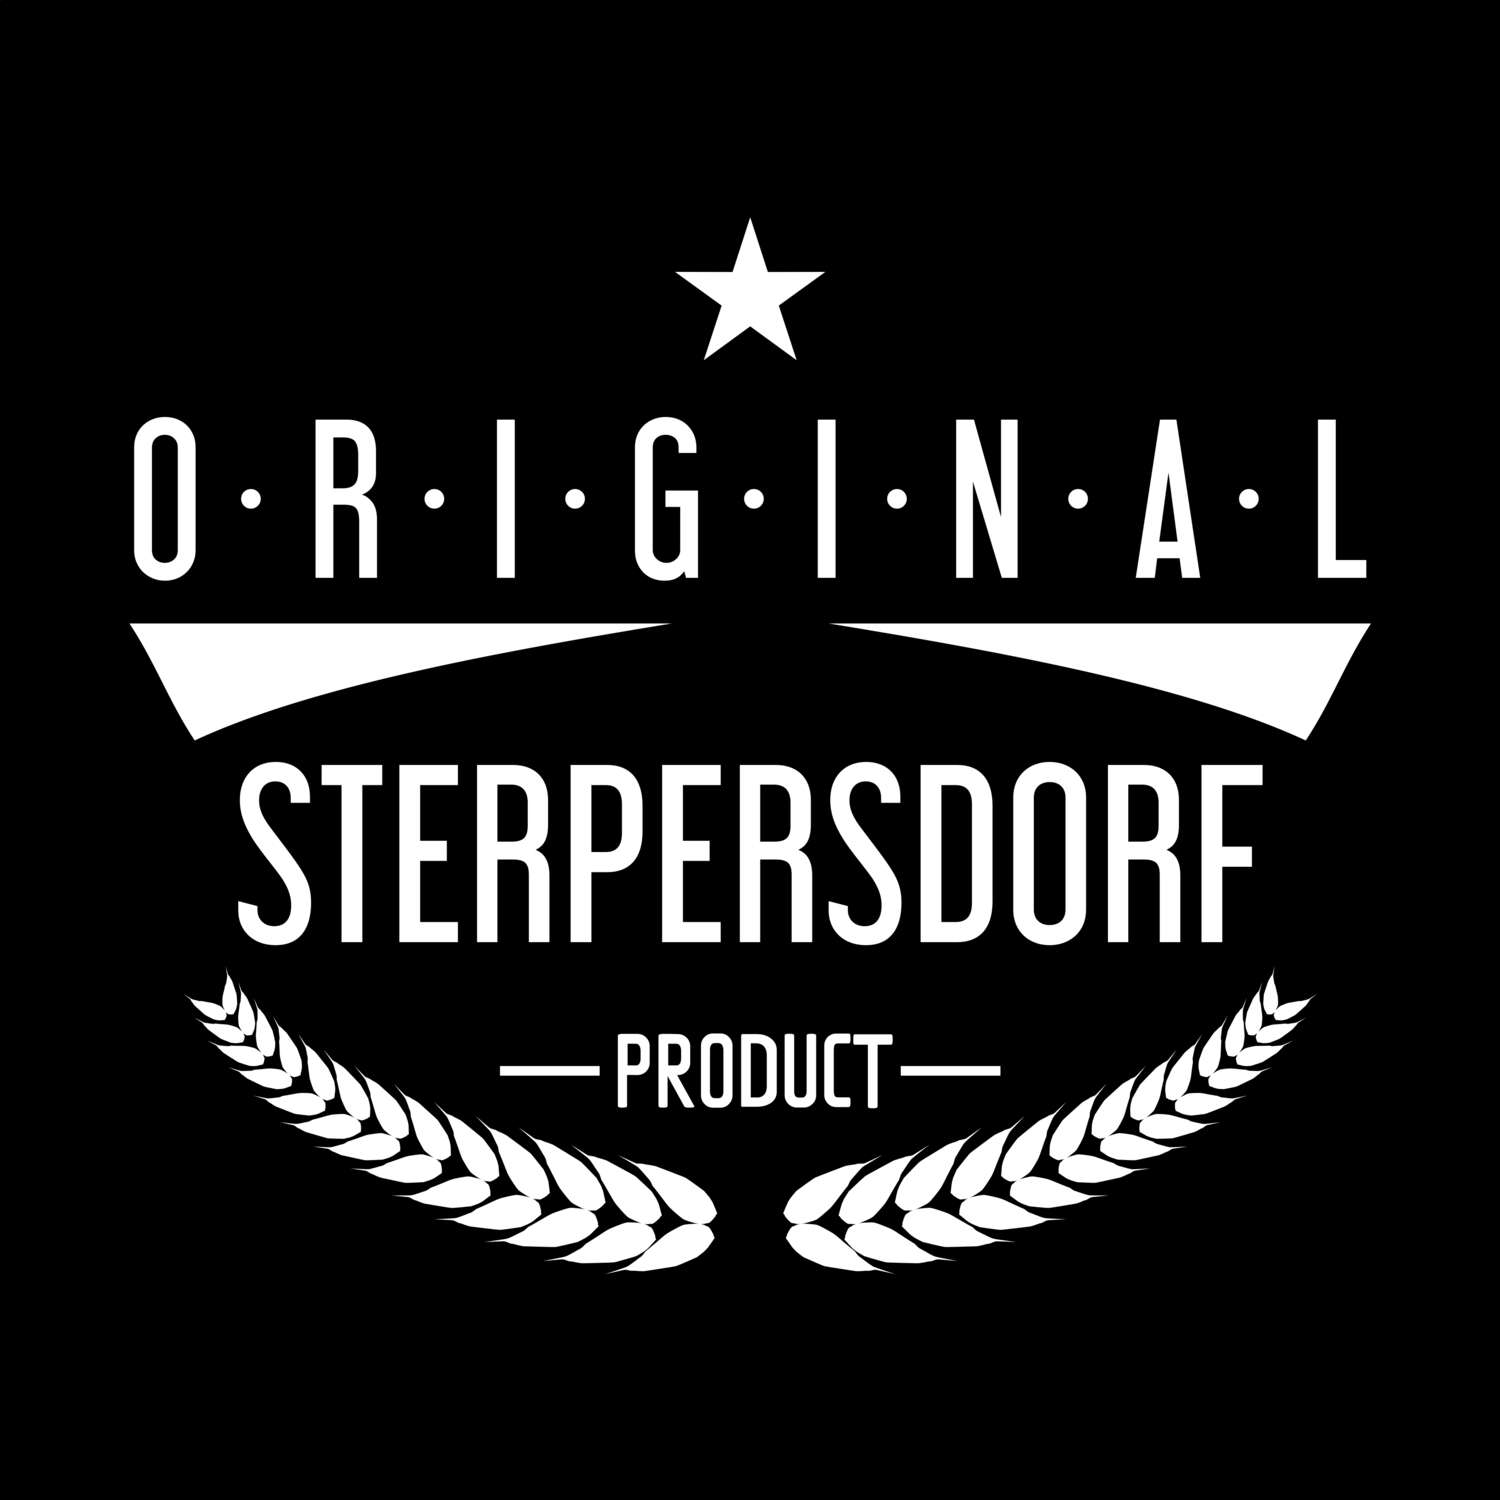 Sterpersdorf T-Shirt »Original Product«